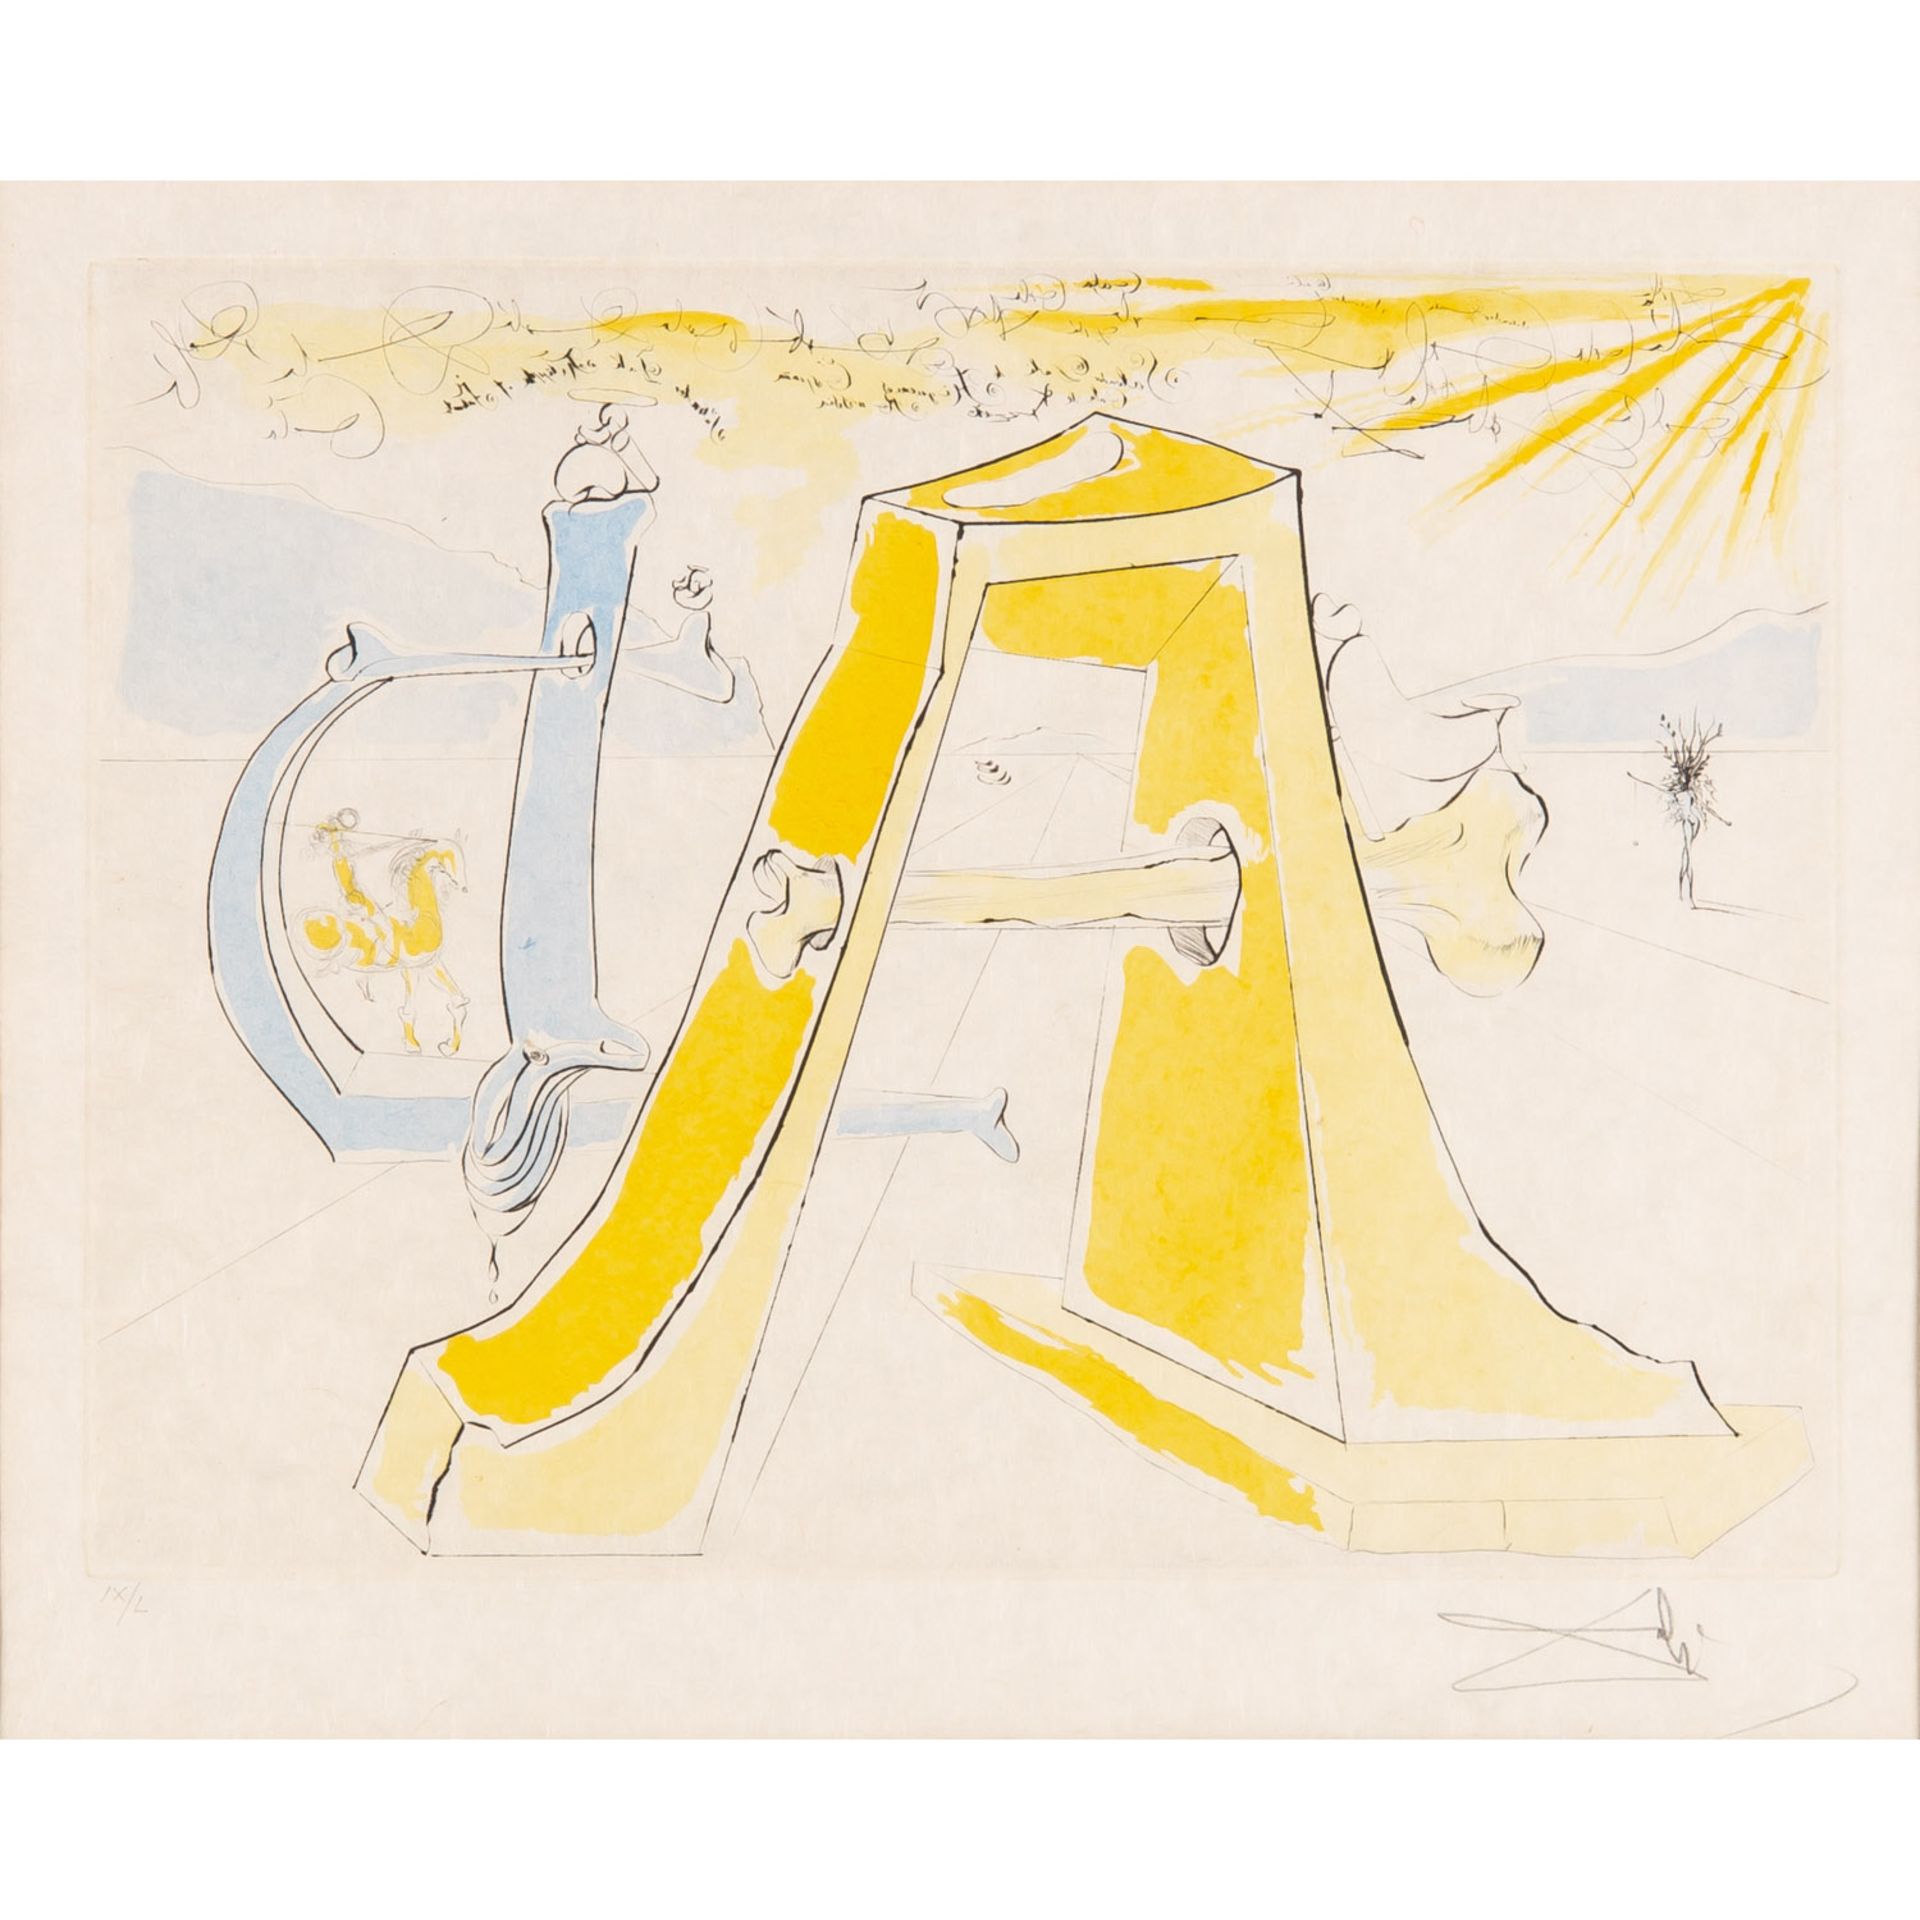 DALI, SALVADOR (1904-1989) "Hommage à Dürer" 1971